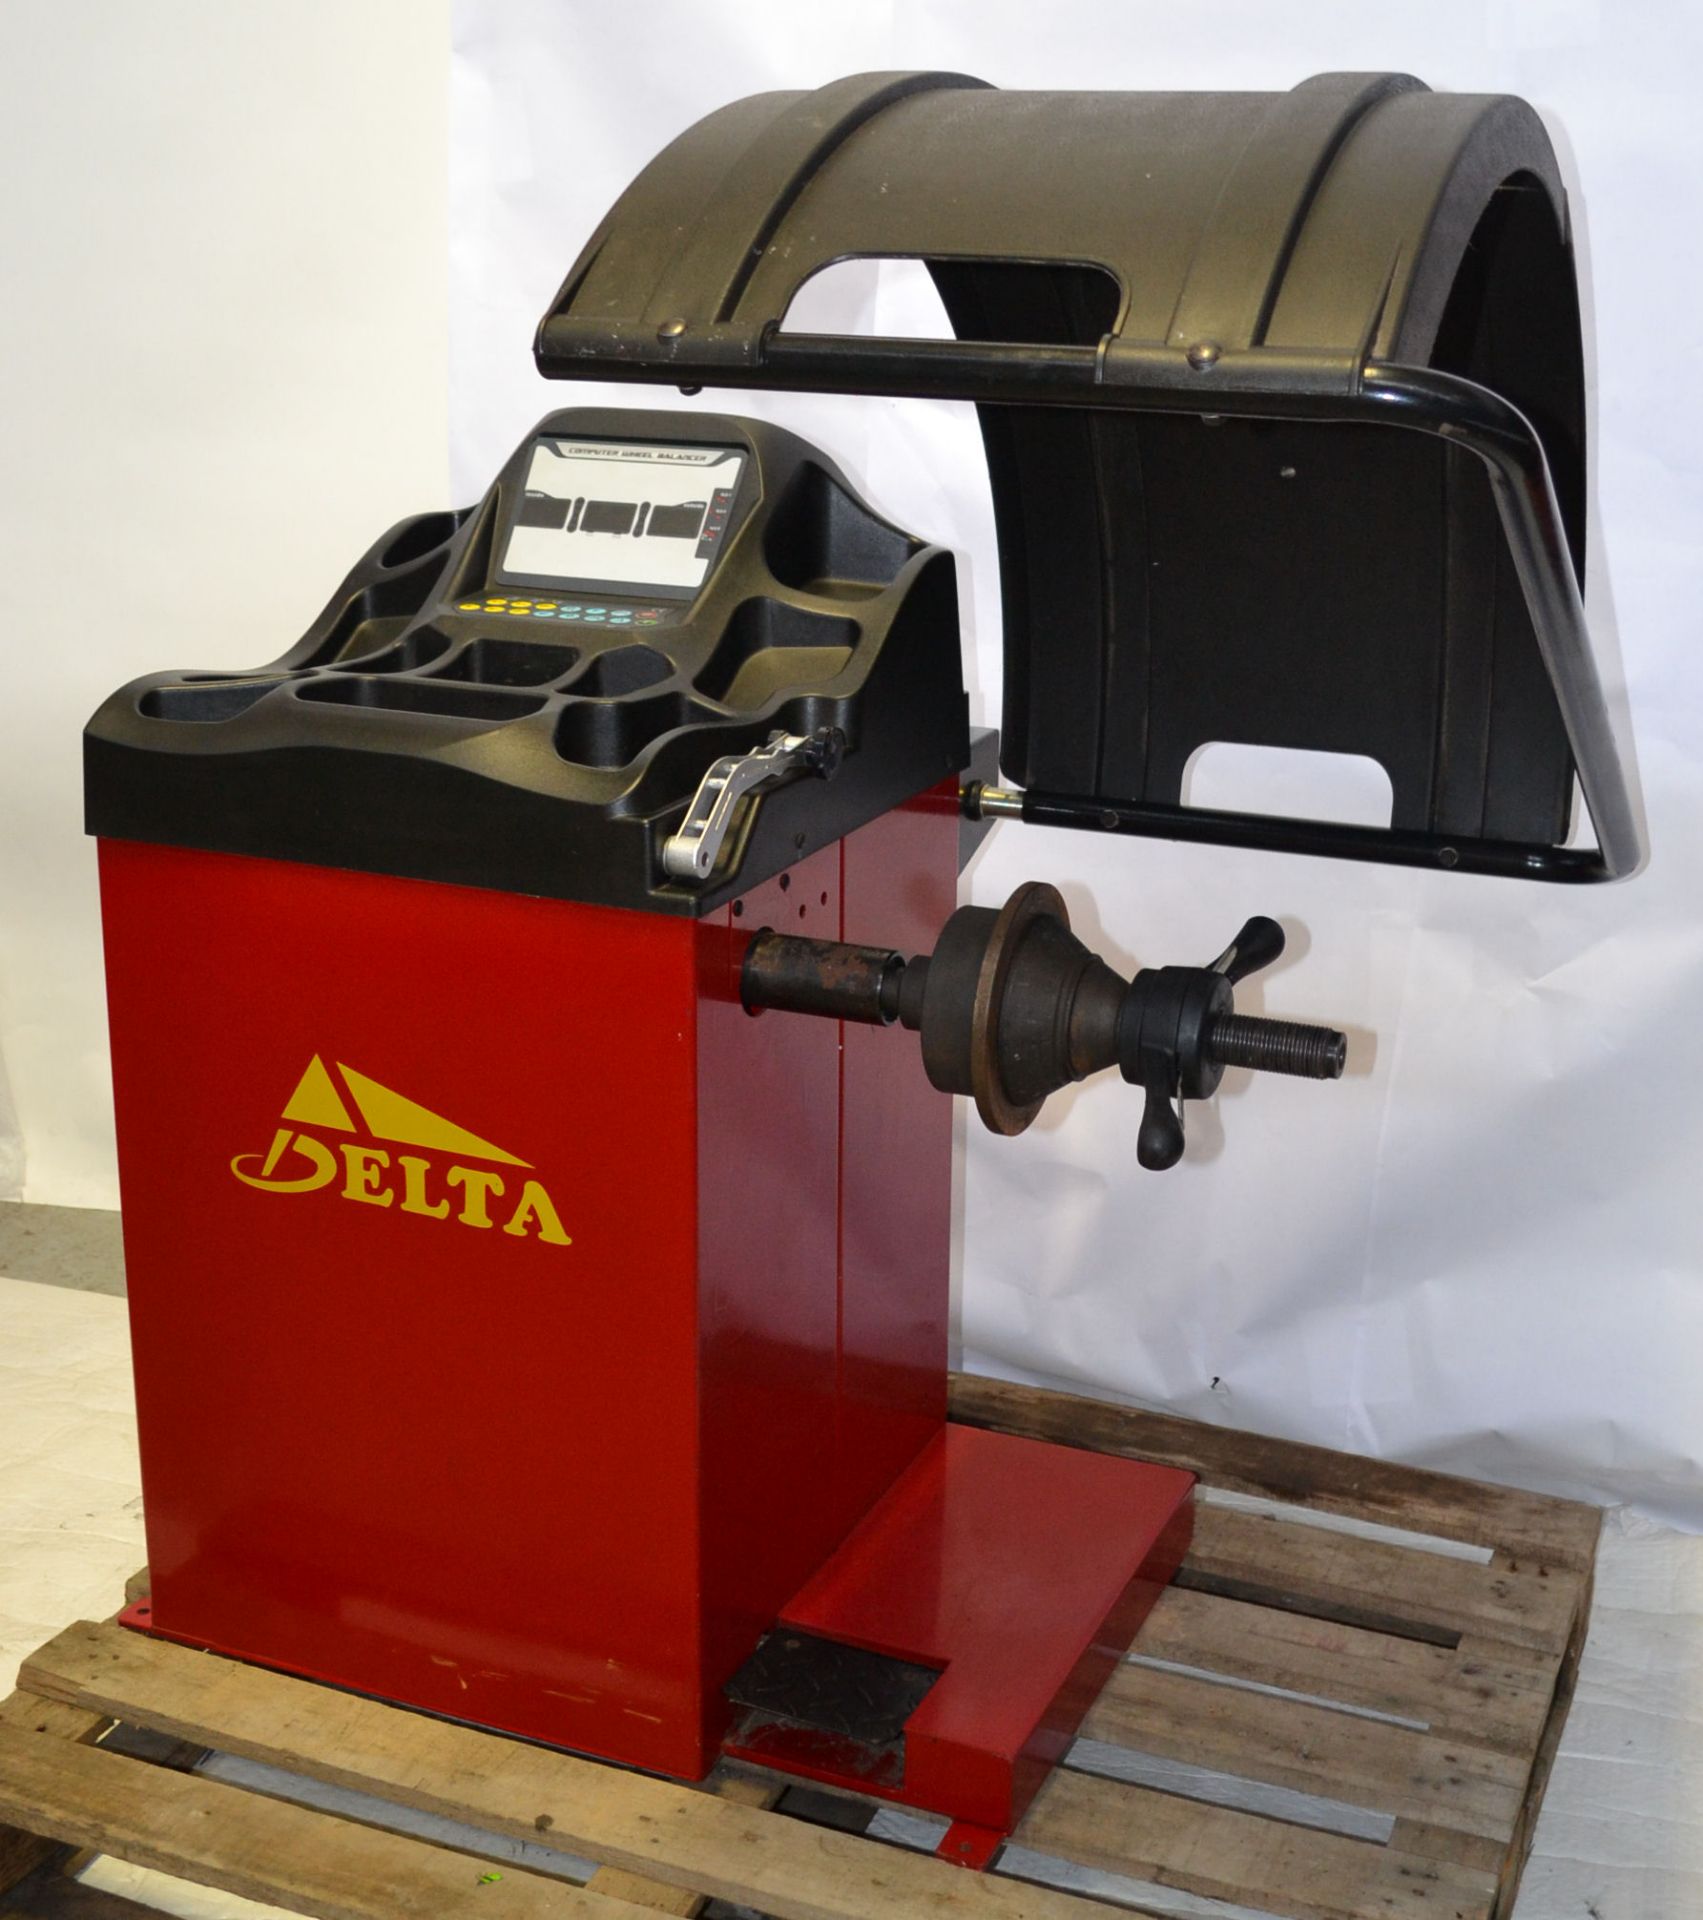 1 x Delta Workshop Wheel Balancer - Model SBM95AP - Excellent Condition - CL007 - Location: - Image 3 of 15